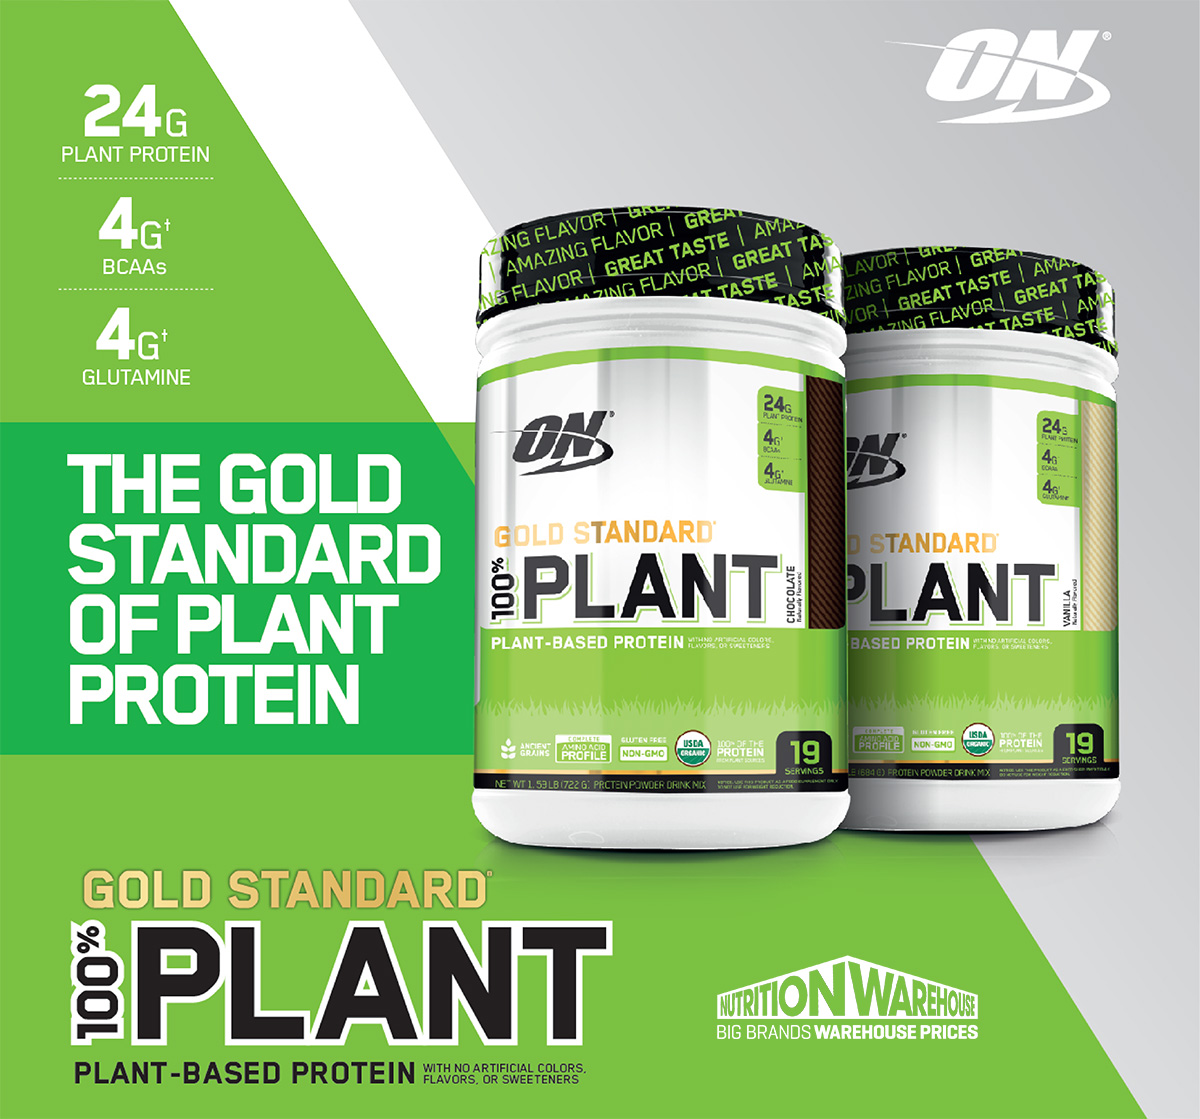 Optimum Nutrition Gold Standard Plant